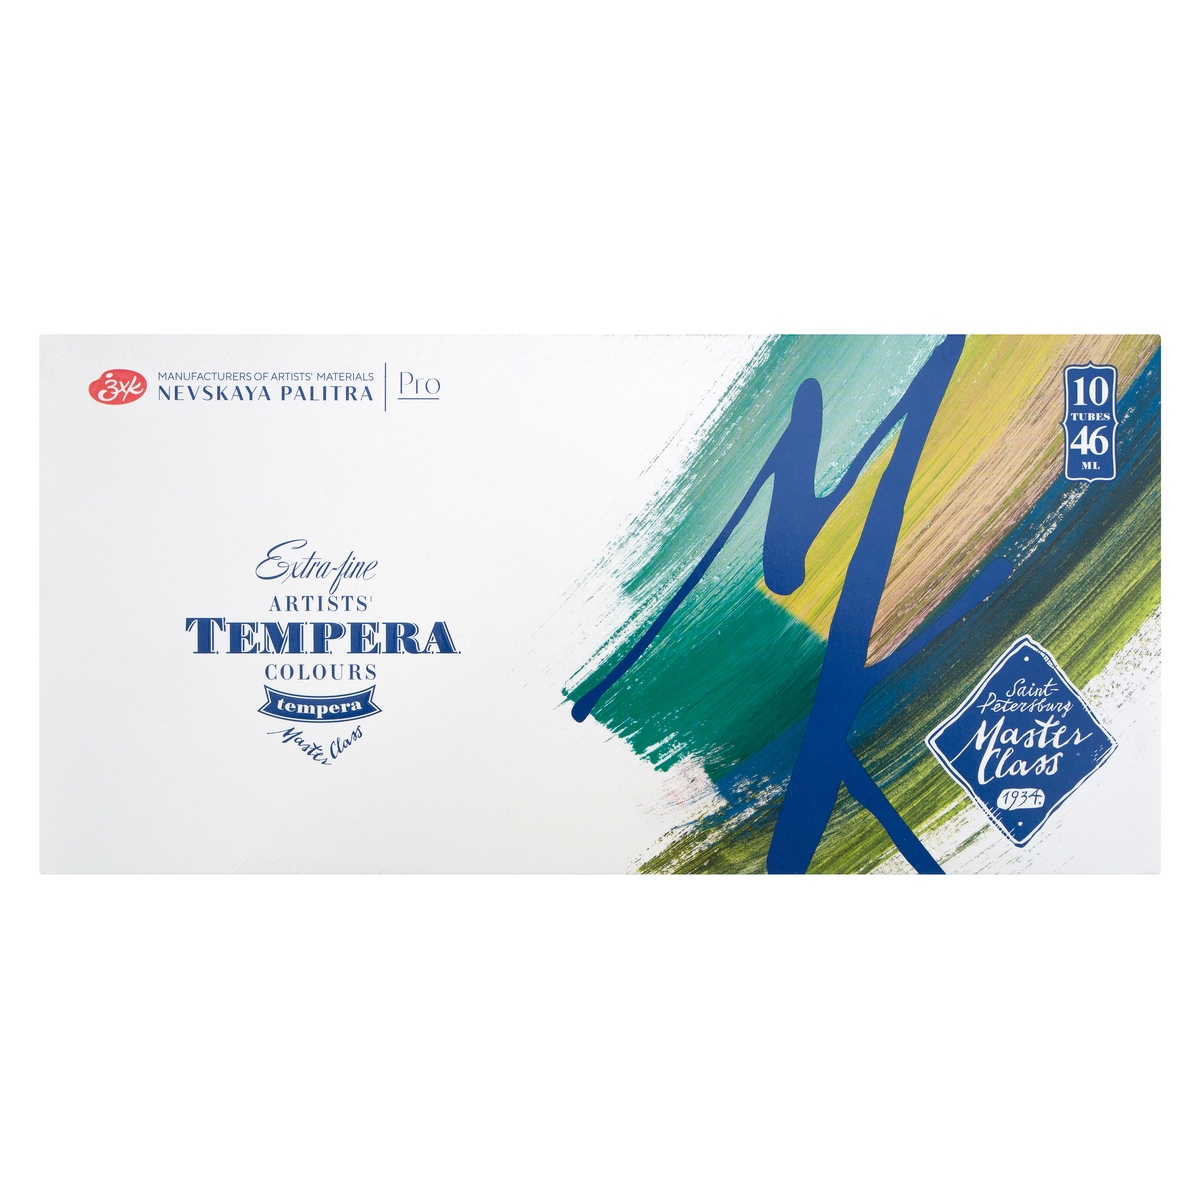 Tempera set Master-Class cardboard box